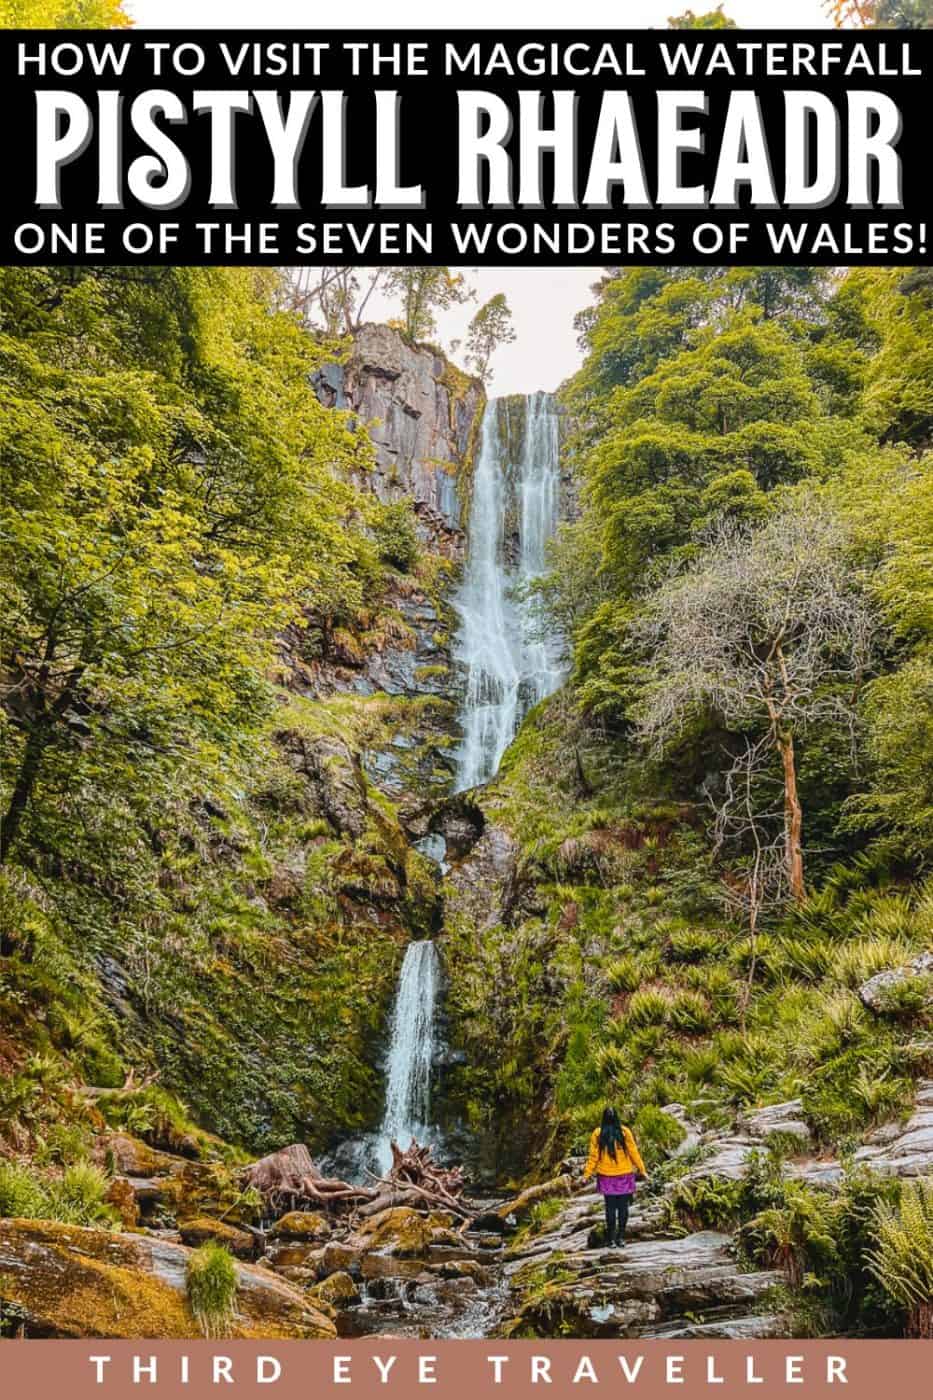 How to visit Pistyll Rhaeadr Waterfall Wales